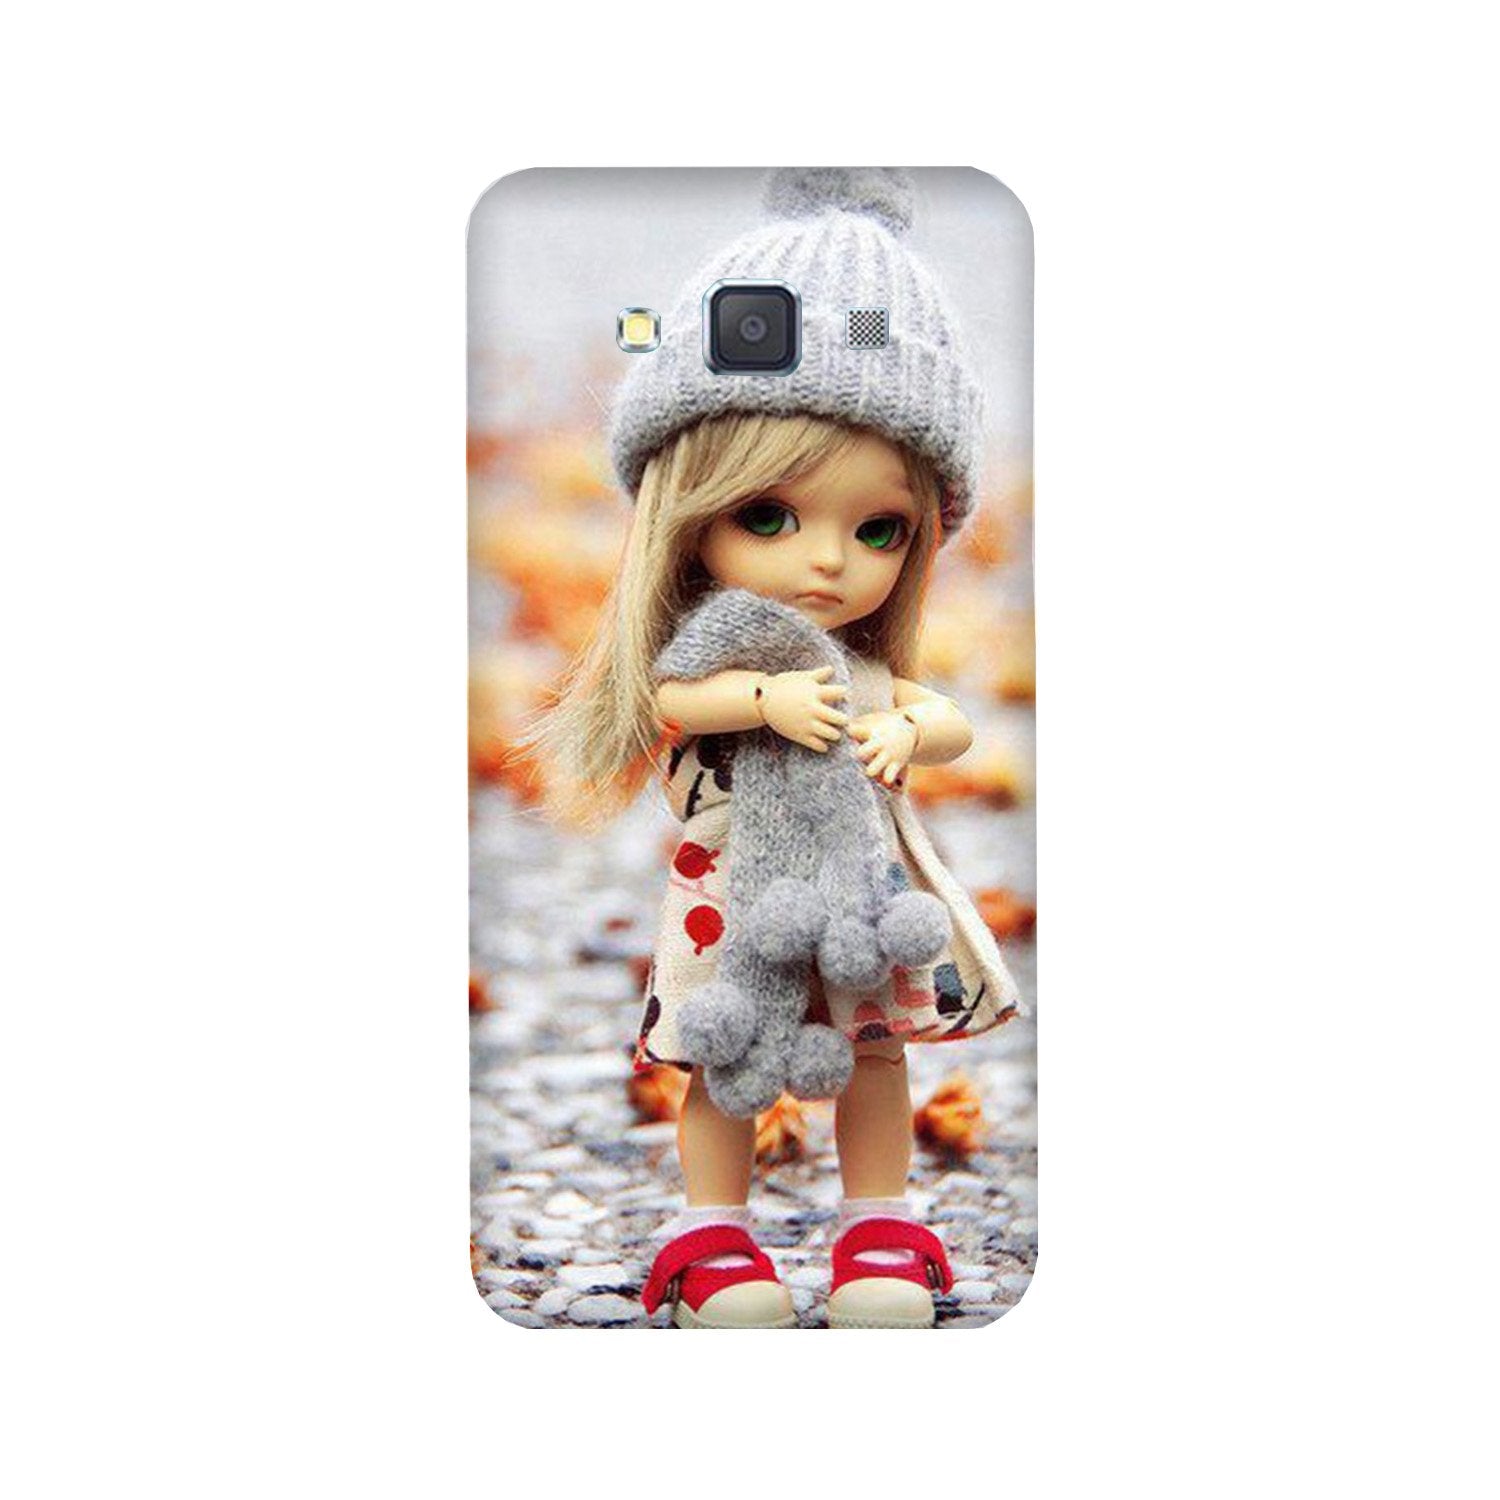 Cute Doll Case for Galaxy E7